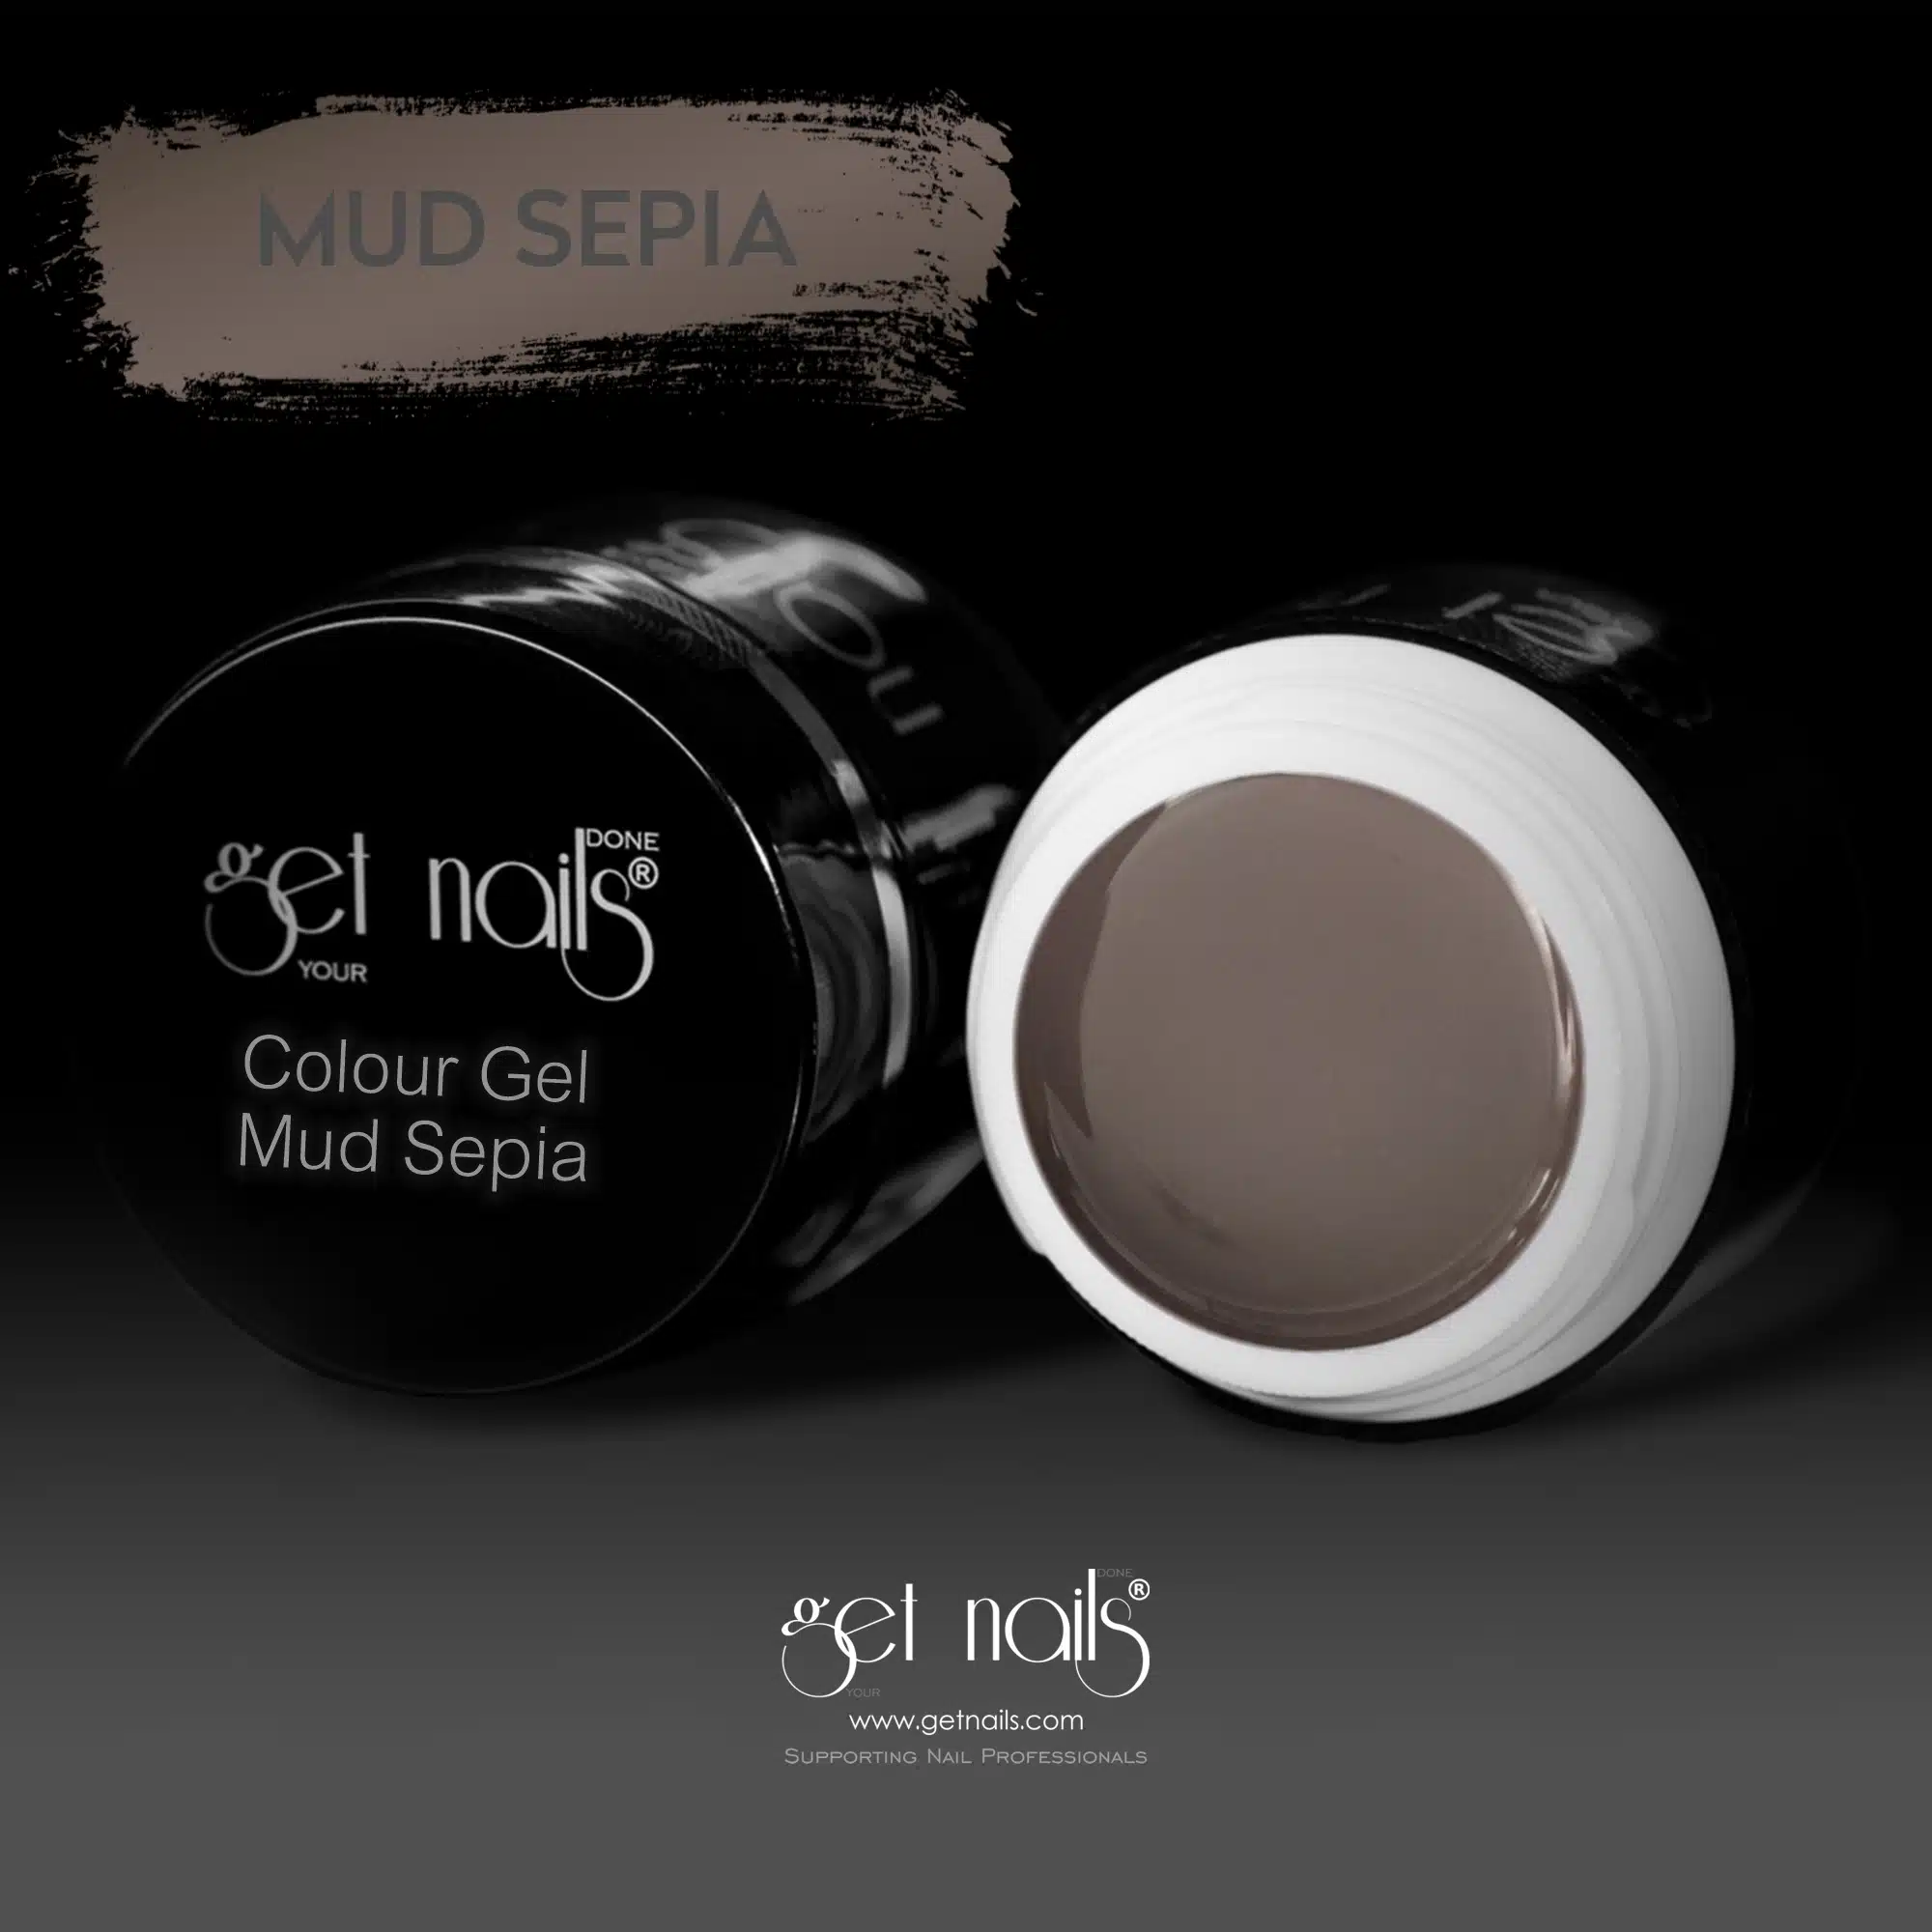 Get Nails Austria - Colour Gel Mud Sepia 5g